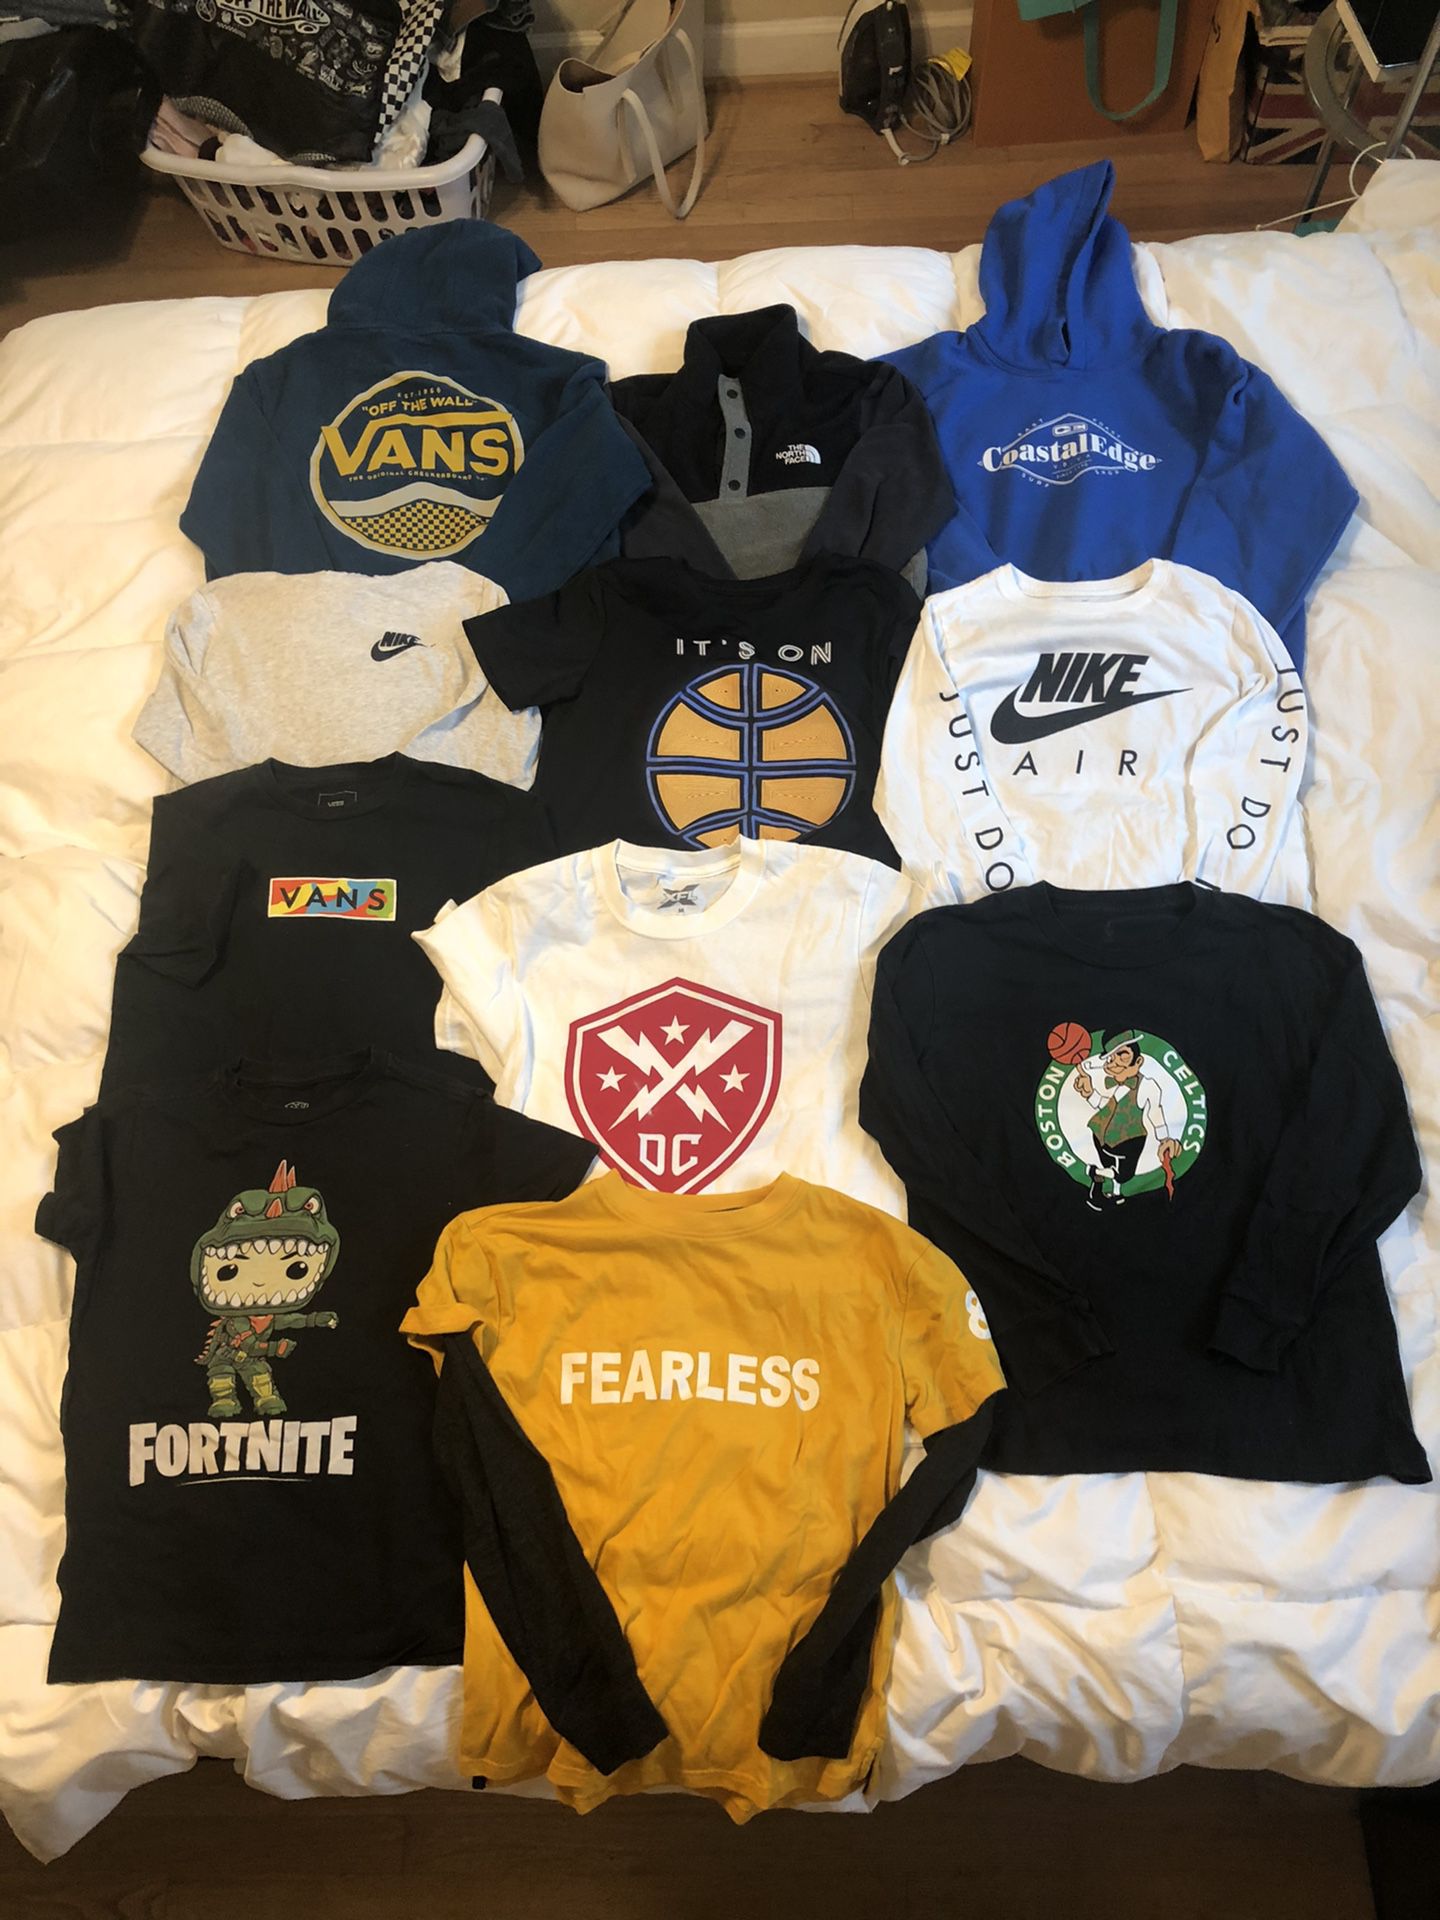 Boys lot - Youth Medium T-shirts and hoodies (Nike, Vans, Fortnite, Celtics, etc)